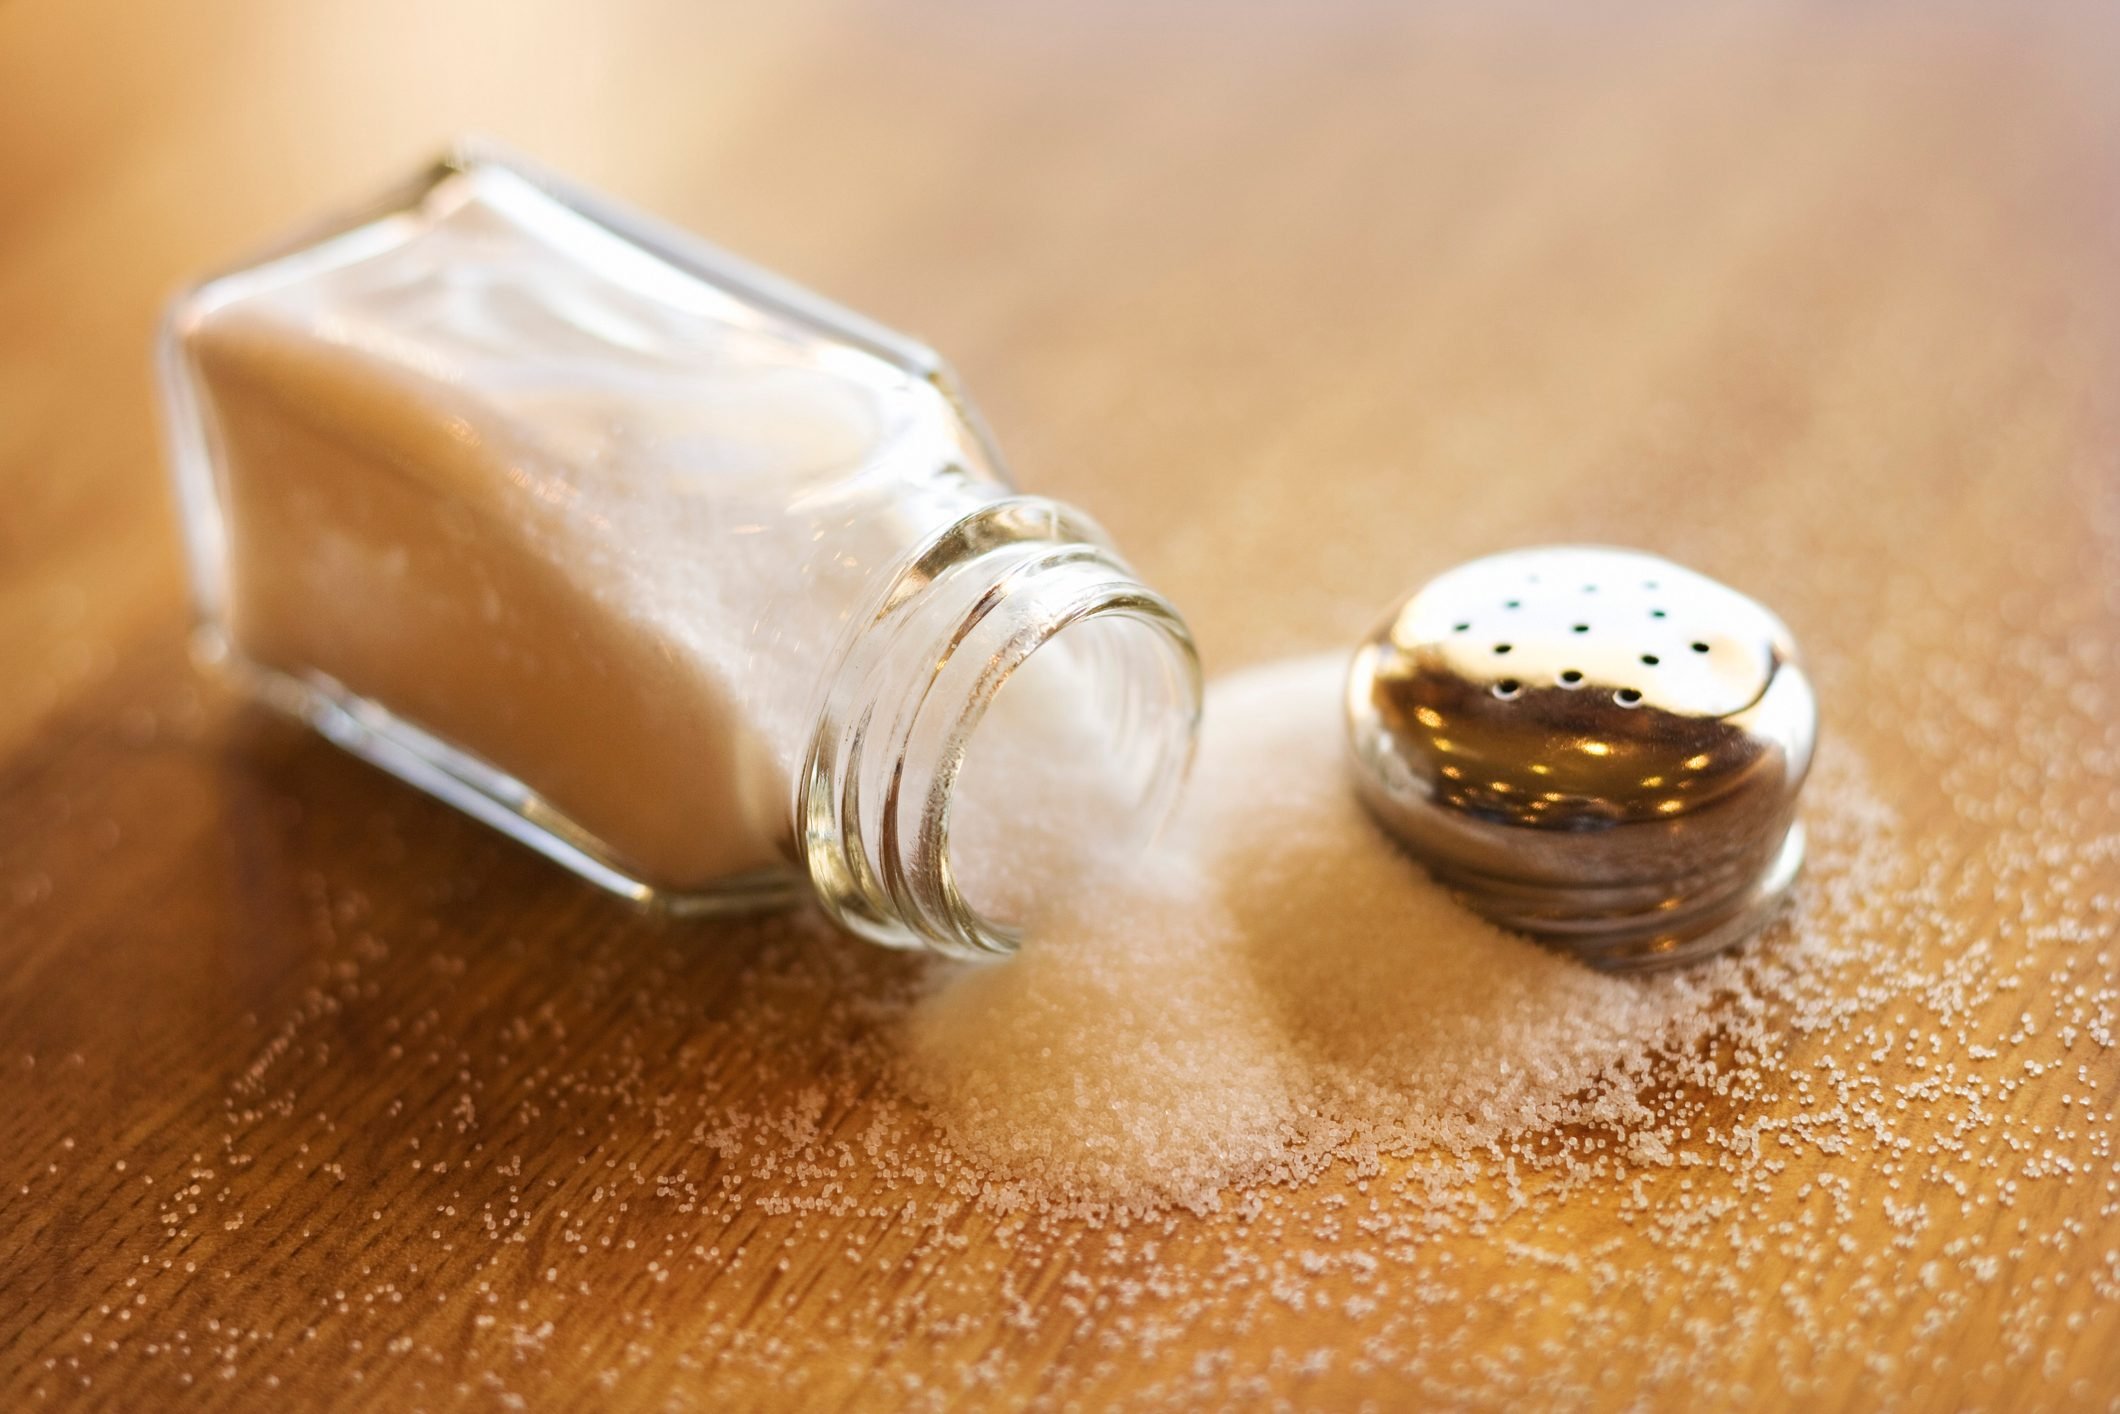 F*** Salt: Take it With a Grain of Salt